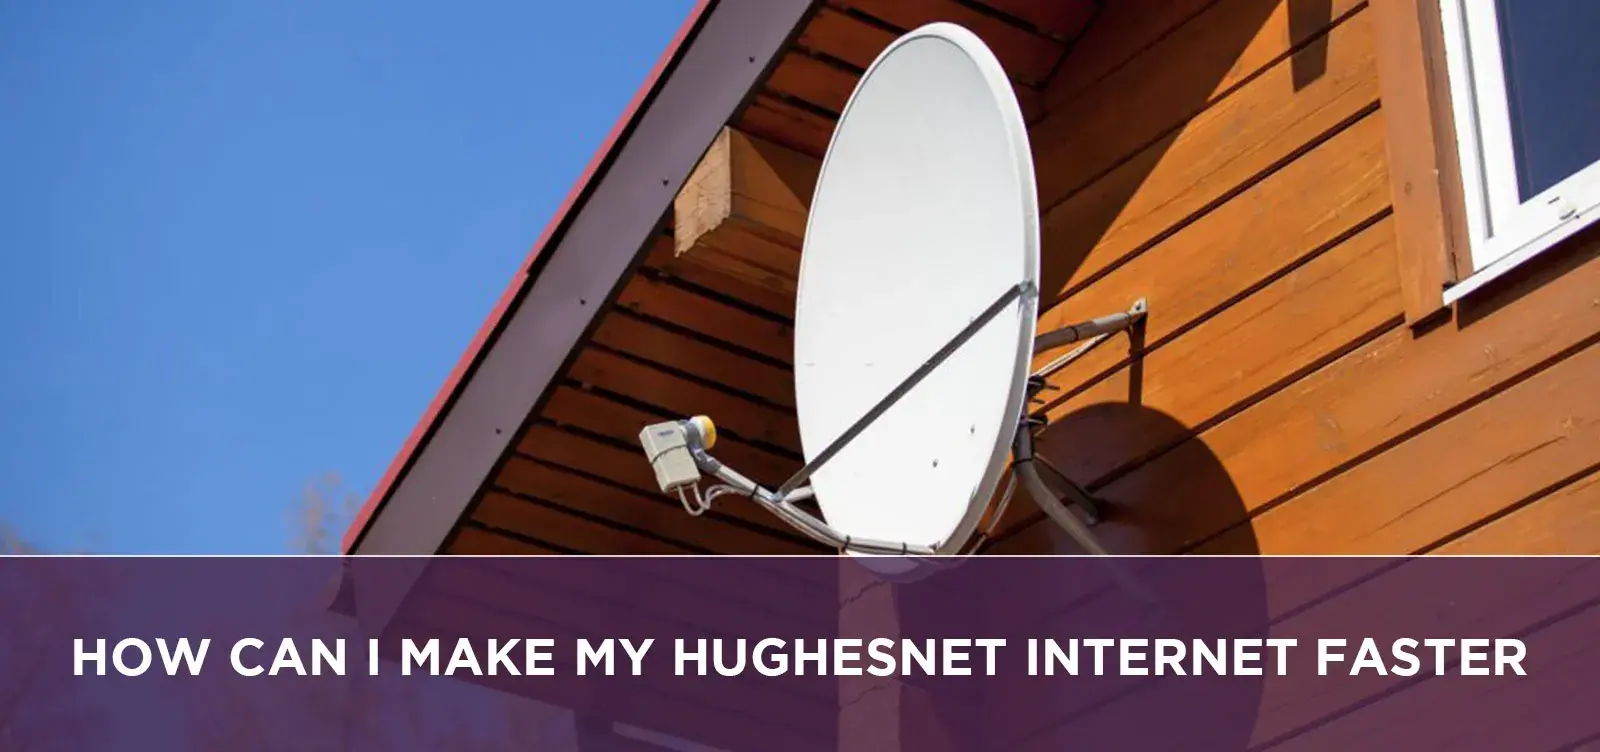 How Can I Make My Hughesnet Internet Faster?